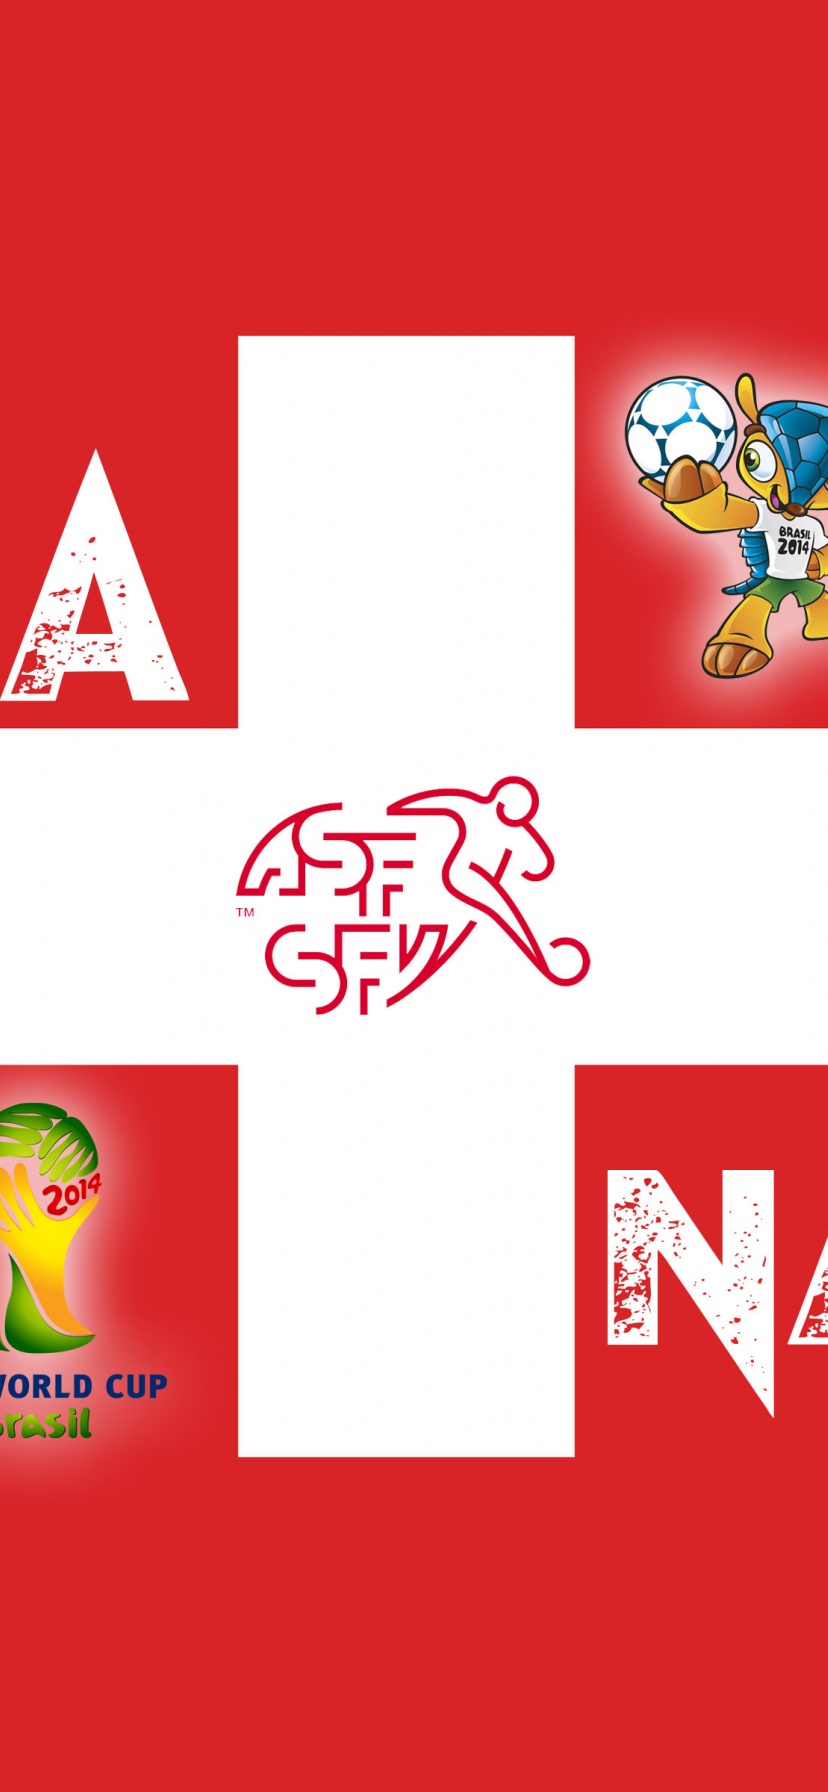 La Nati Switzerland Football Crest Logo